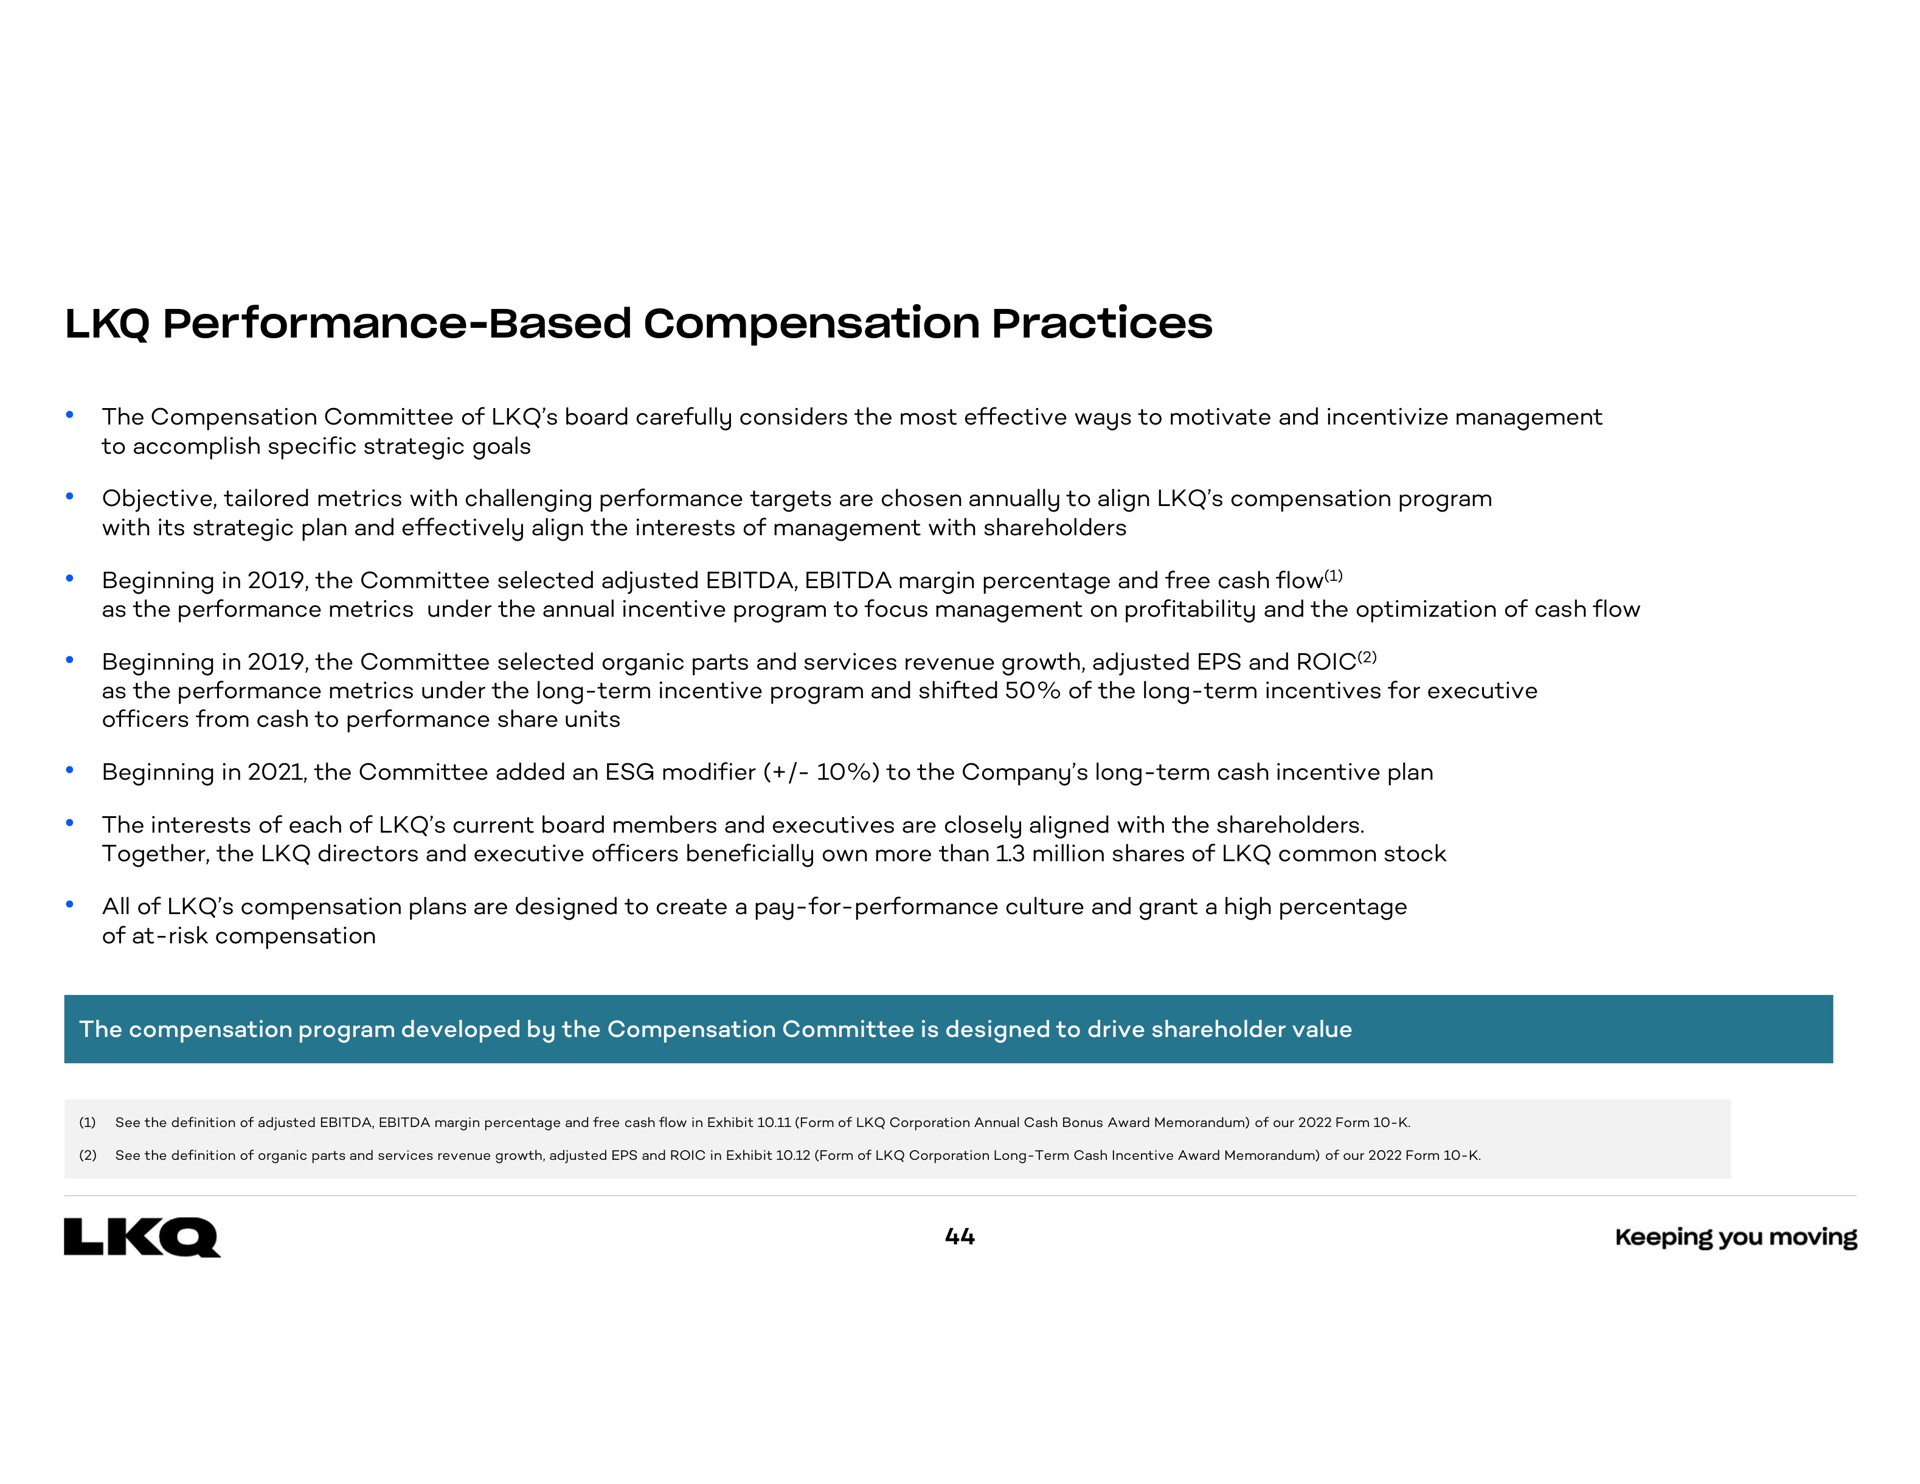 performance based compensation practices | LKQ